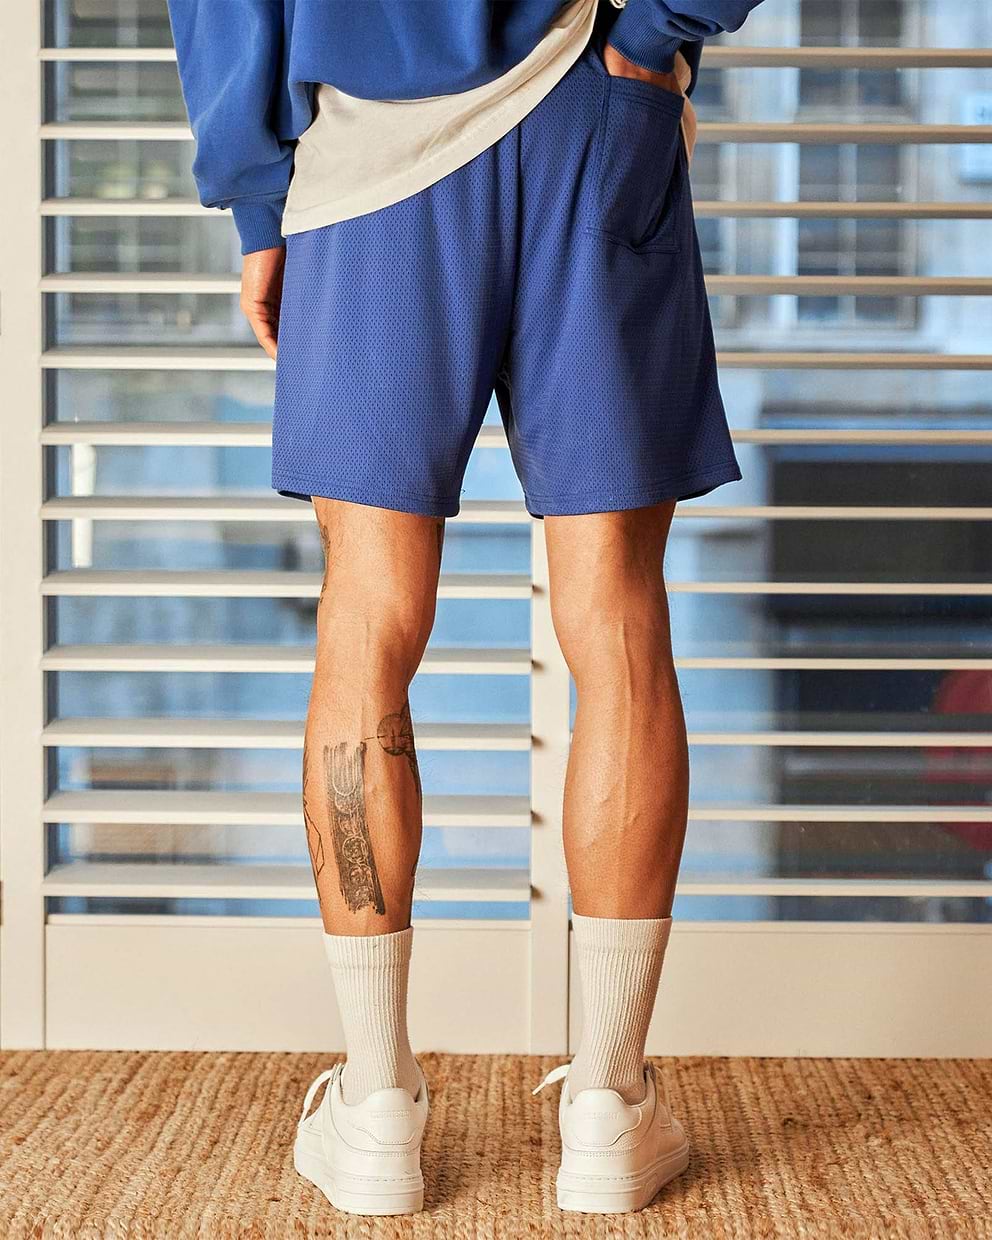 Represent Owners Club Mesh Shorts - Cobalt